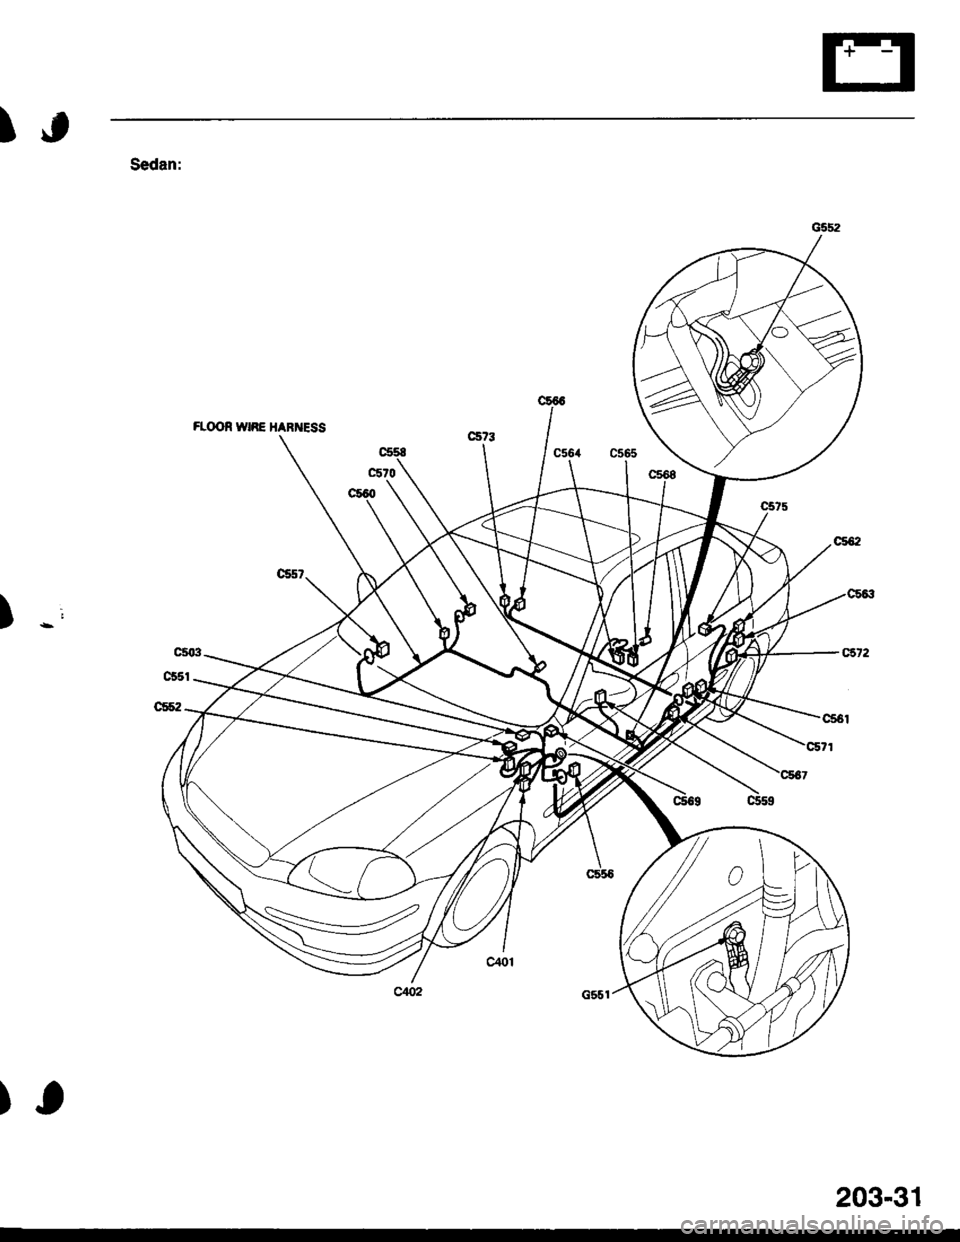 HONDA CIVIC 1996 6.G Workshop Manual I.r
)-l
Sedan:
FLq)N w|RE HARNESS
cs64 c565
),
203-31 